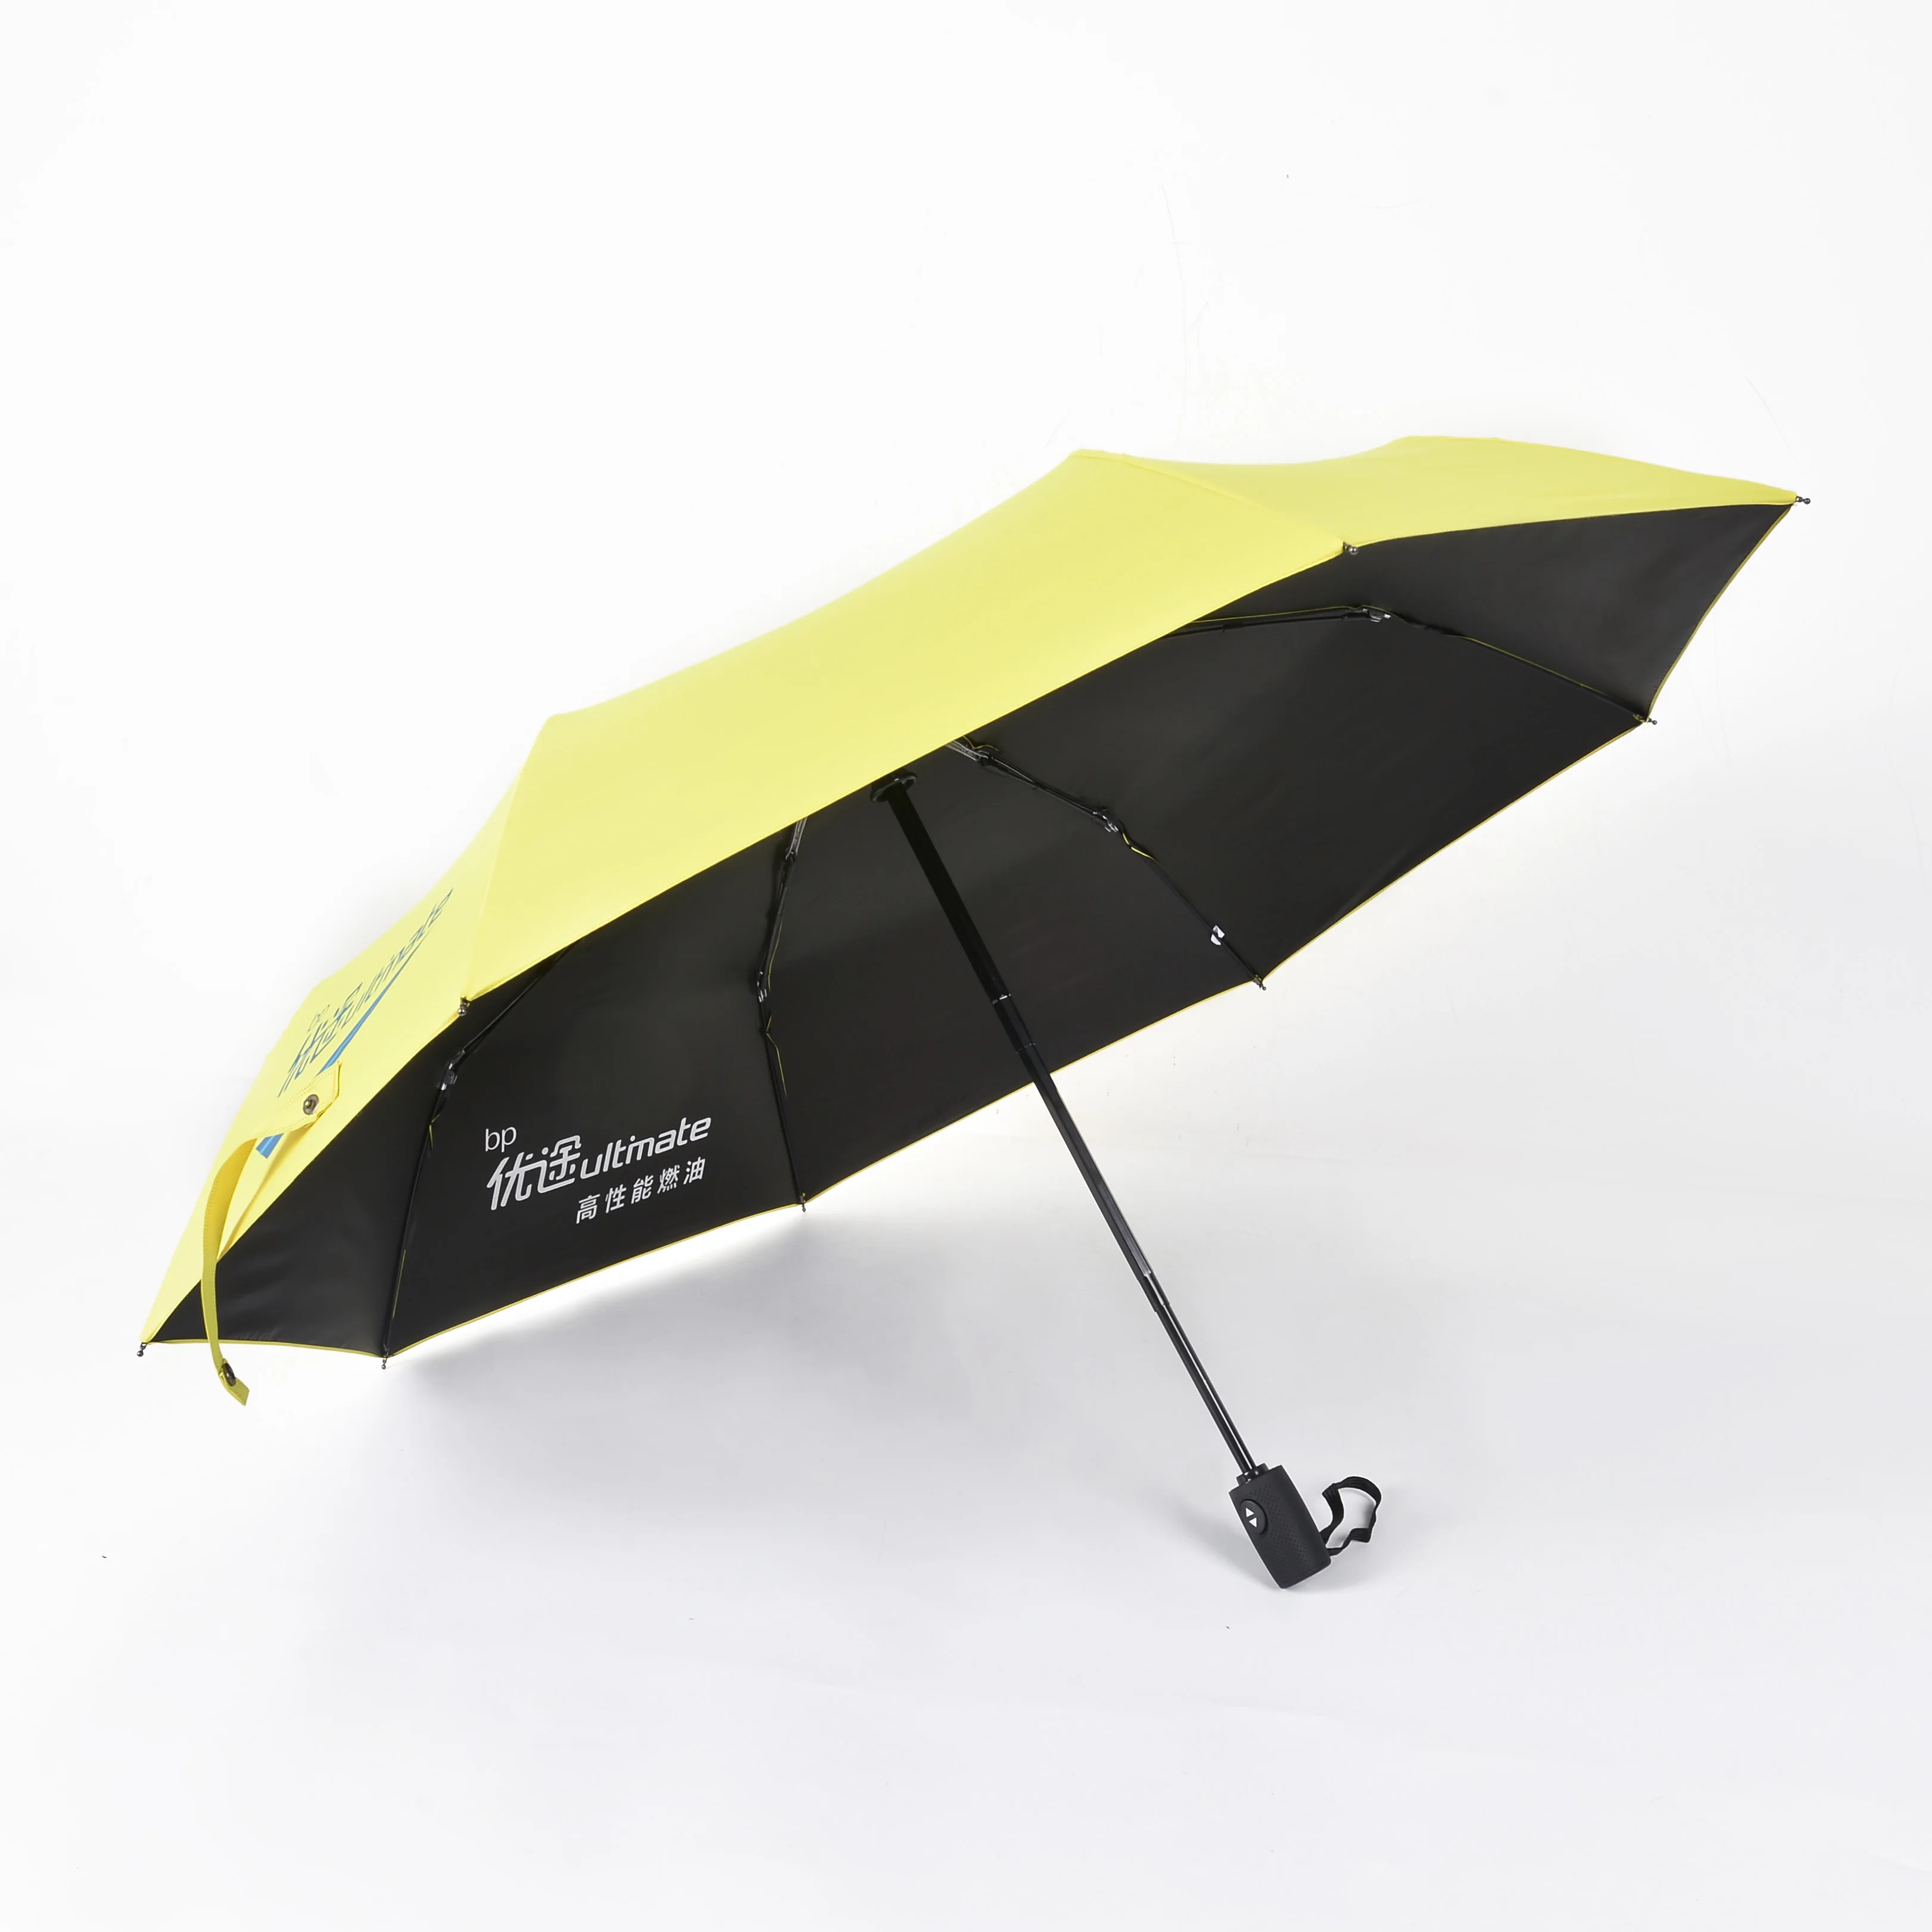 strong windproof folding umbrella